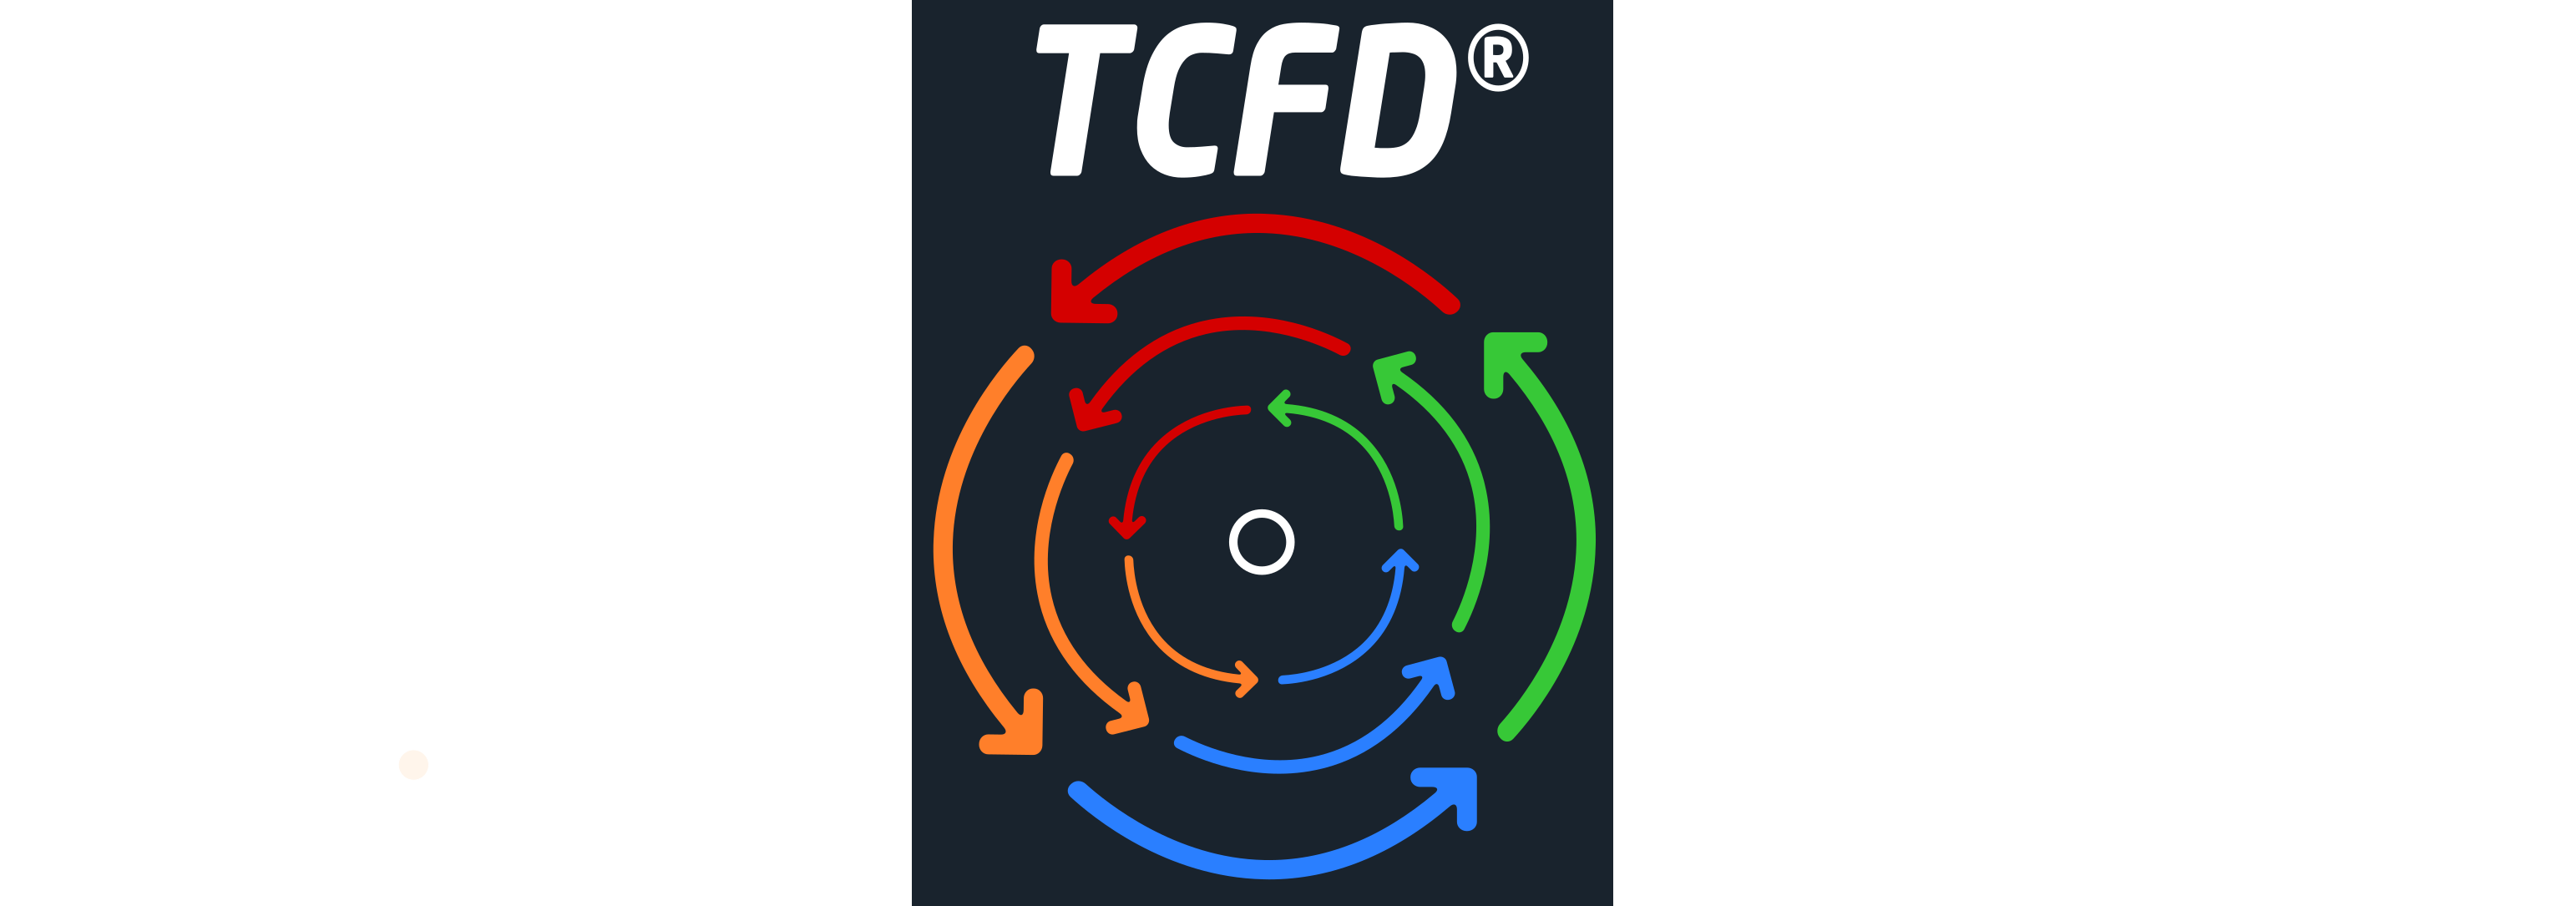 TCFD - Turbomachinery CFD scheme automated workflow